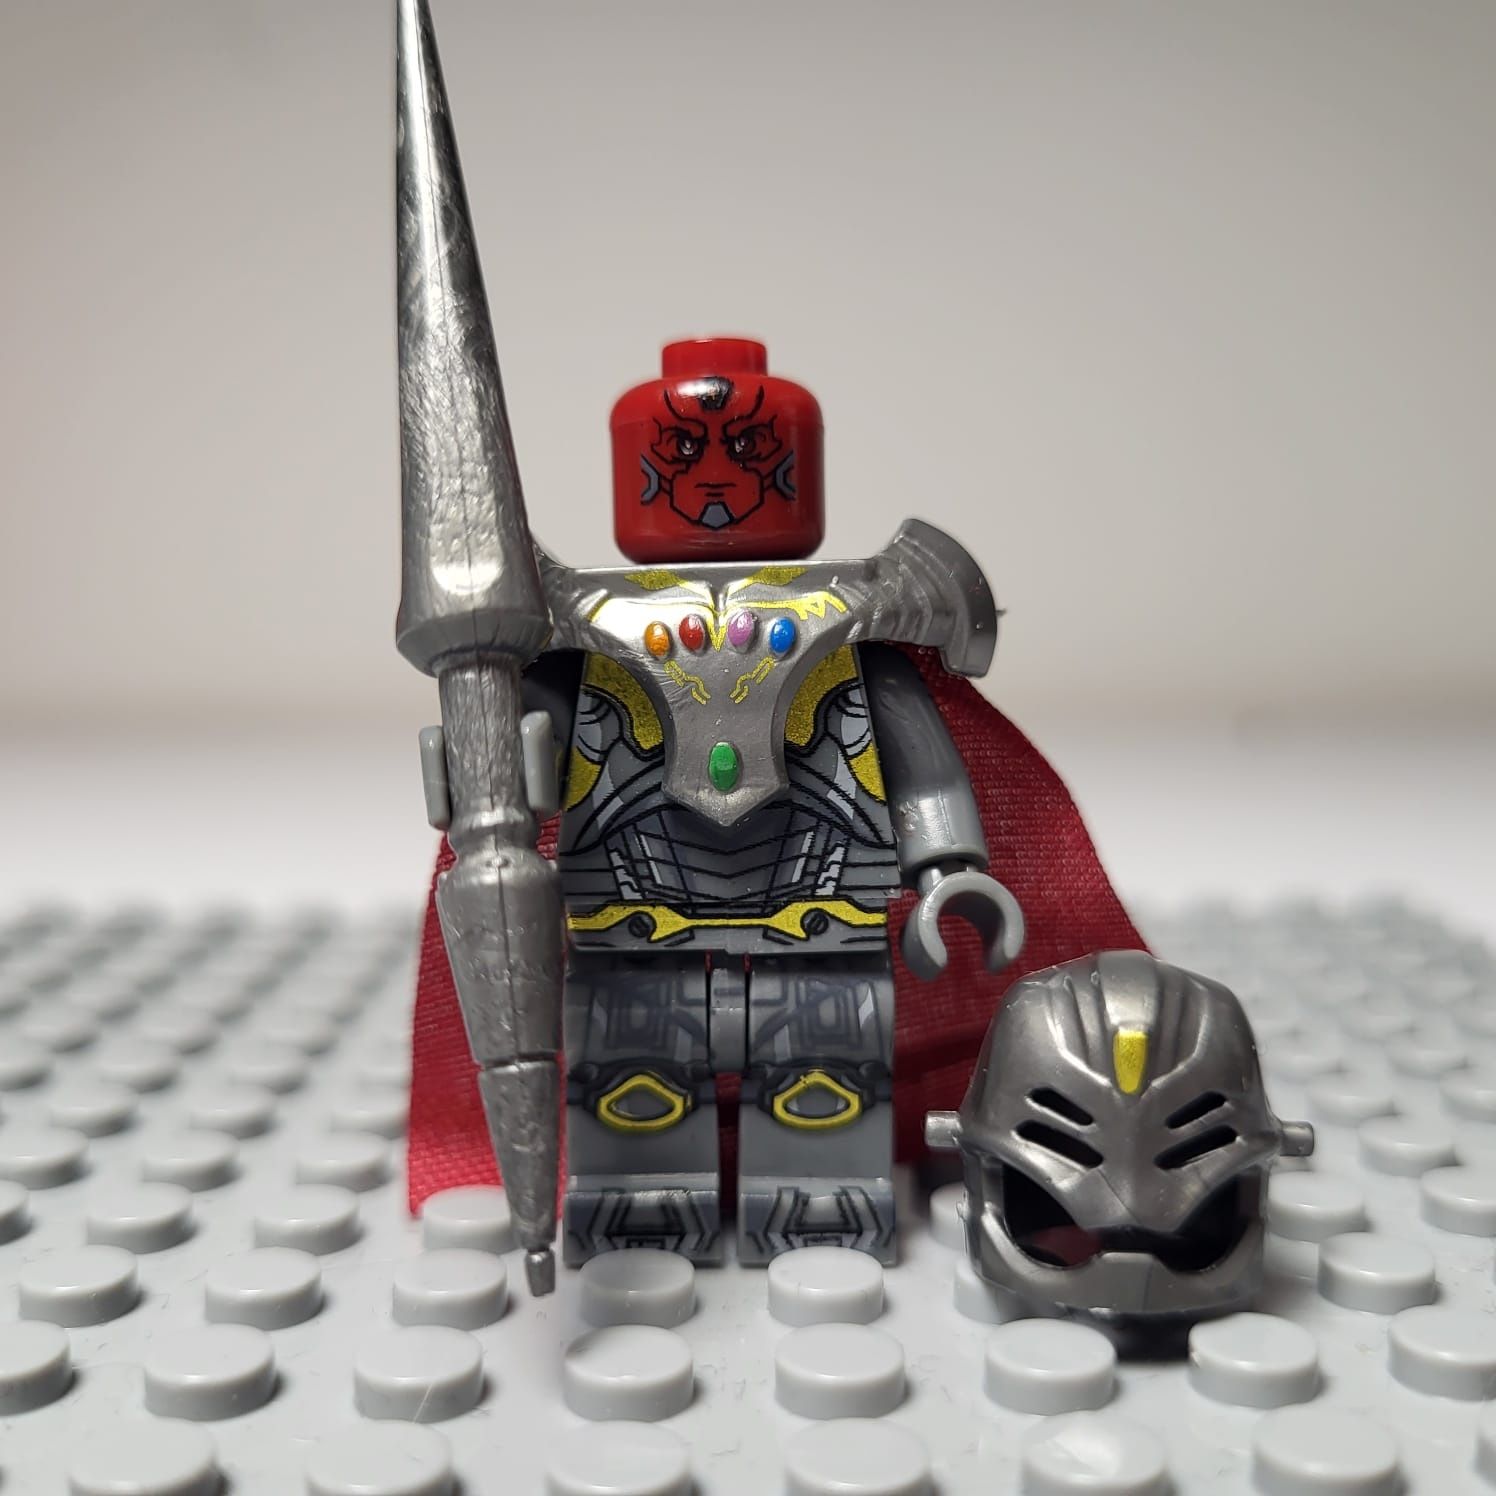 Ultron | Marvel | Gratis Naklejka Lego